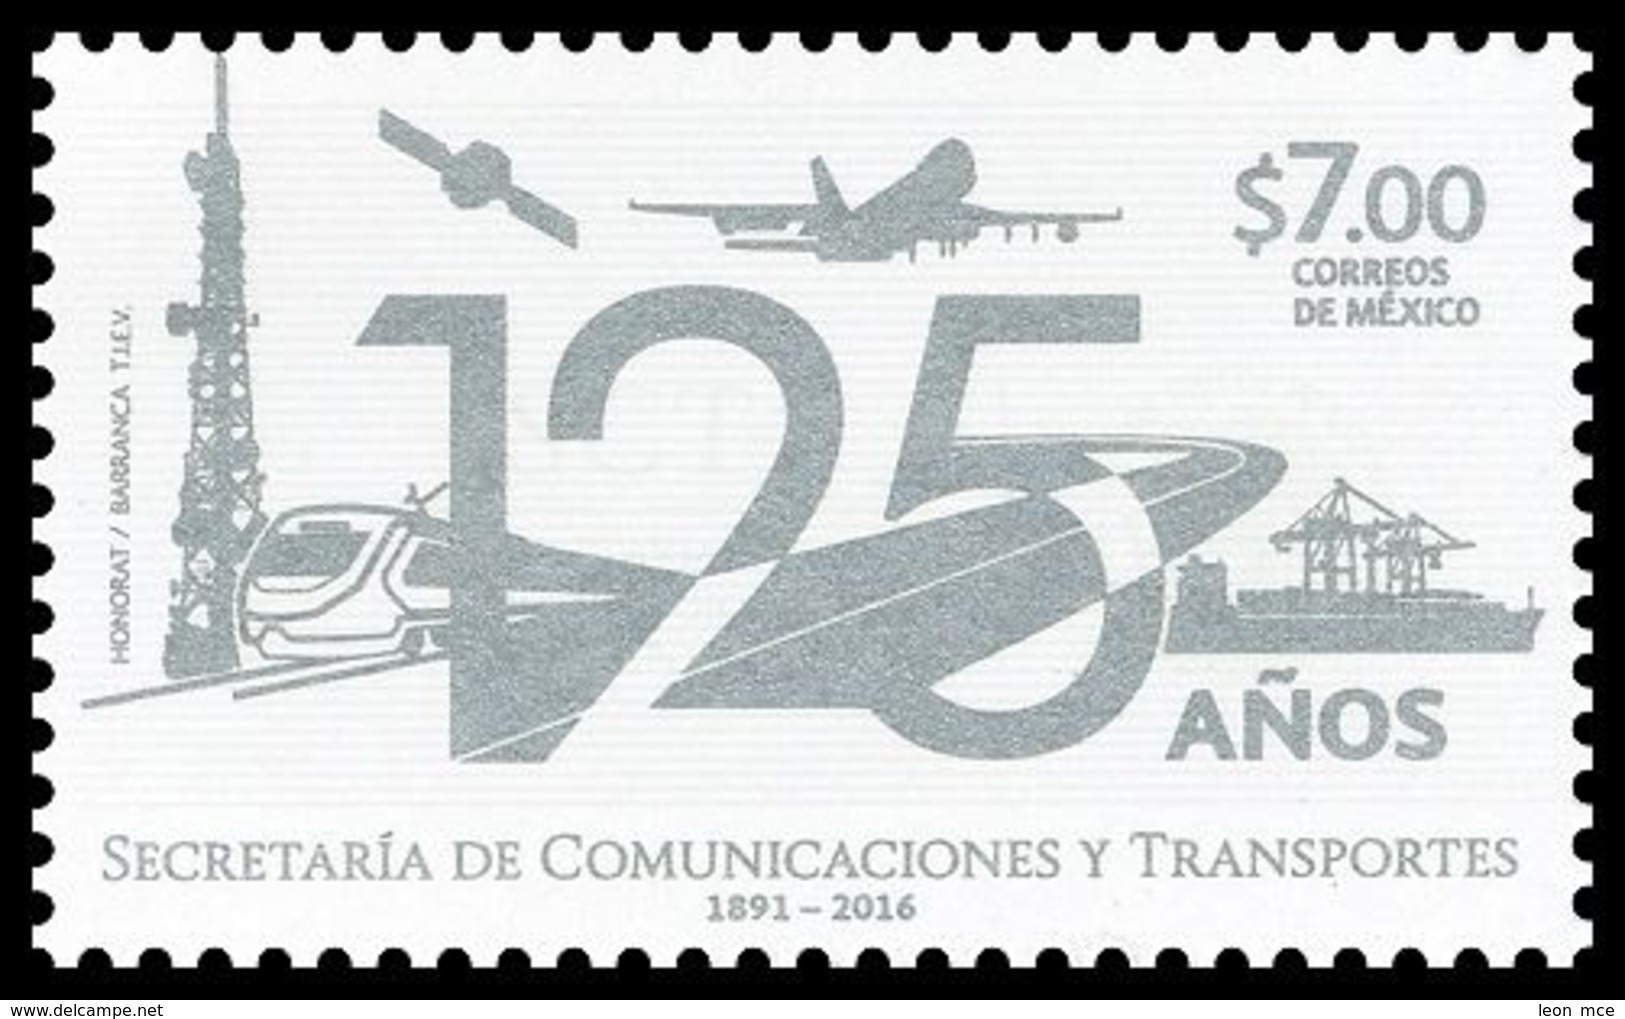 2016 MÉXICO Secretaría De Comunicaciones Y Transportes MNH COMUNICATIONS AND TRANSPORTATIONS, CONTROL TOWER, TRAIN - Mexico